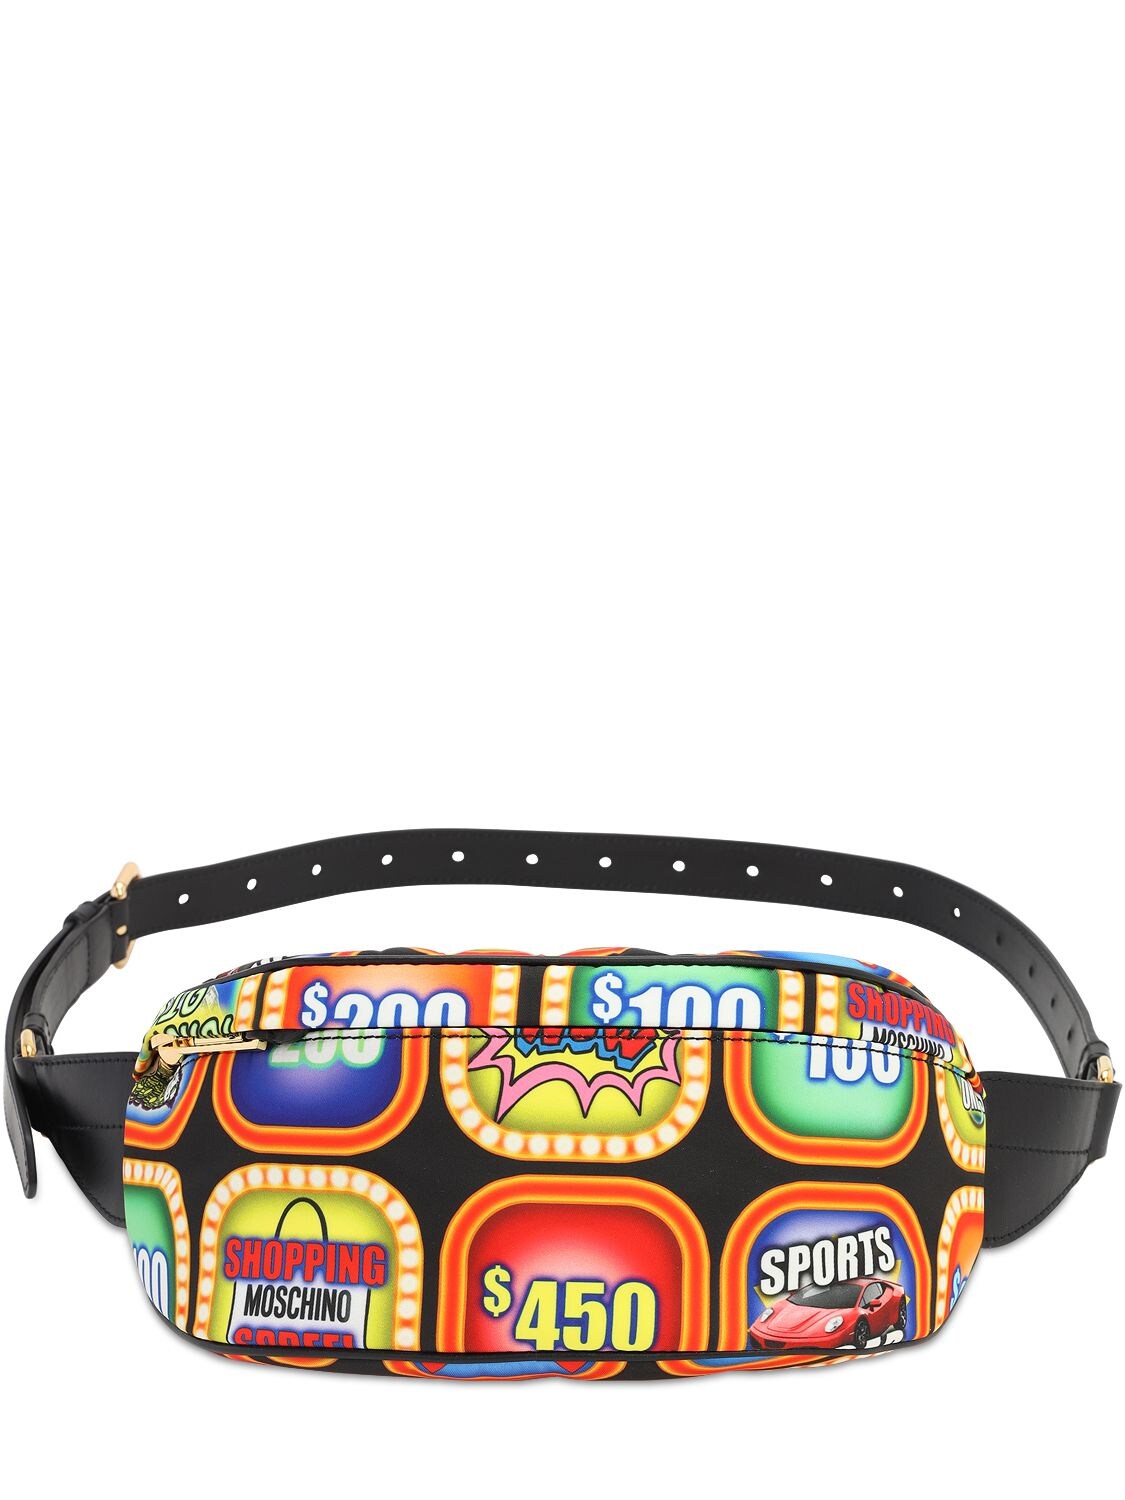 Moschino Multicolor Troll Print Belt Bag